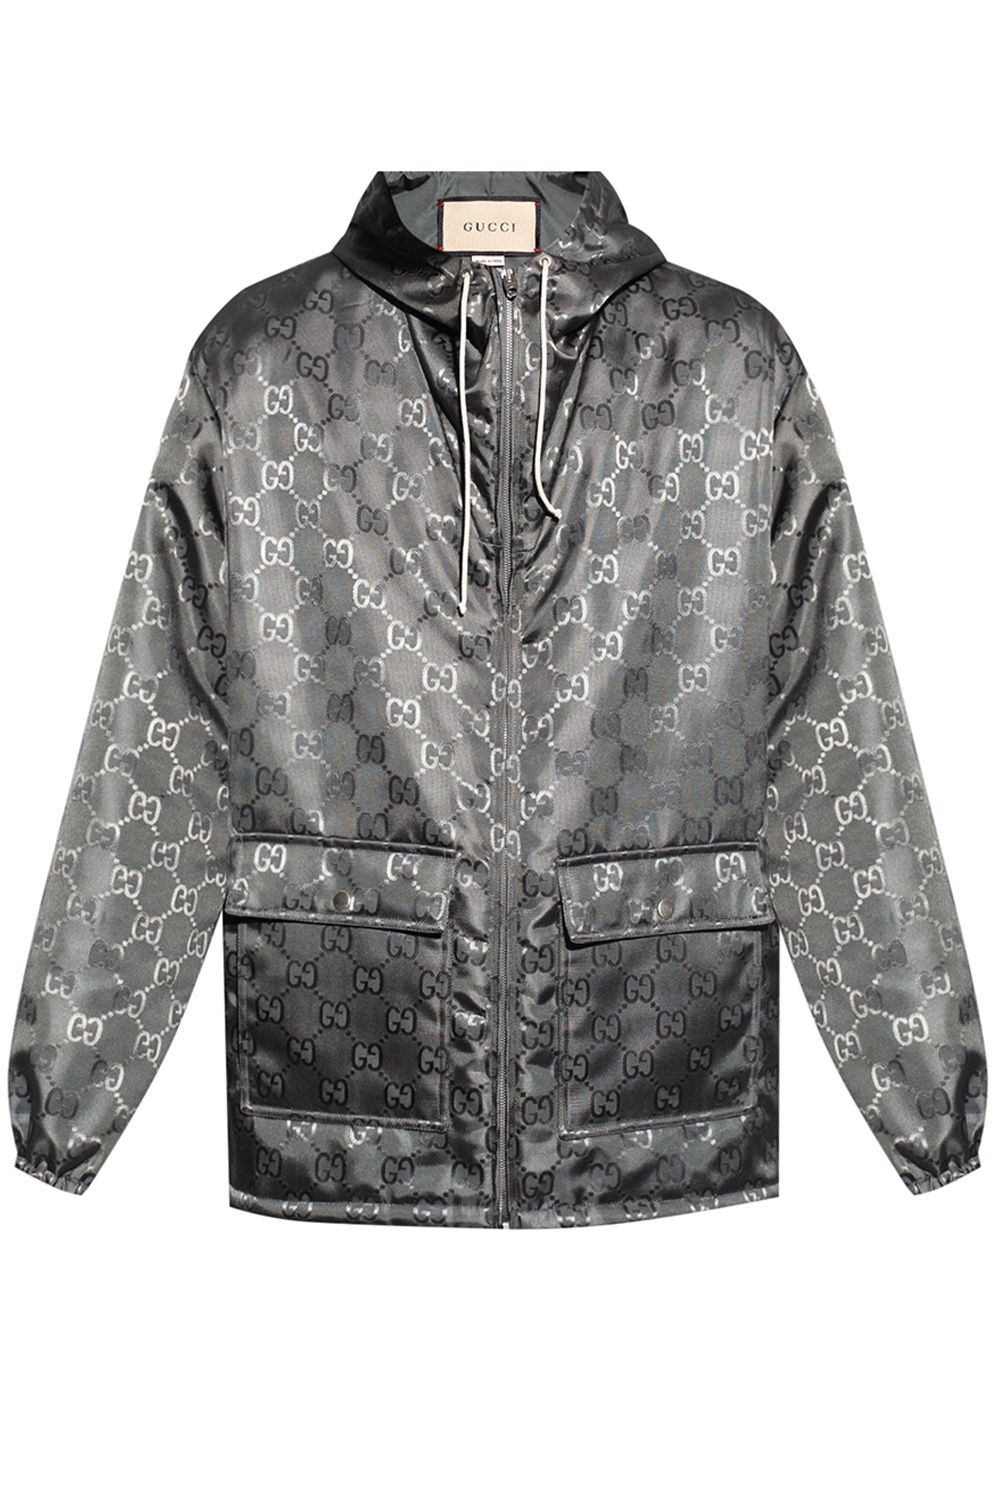 reflective monogram jacket